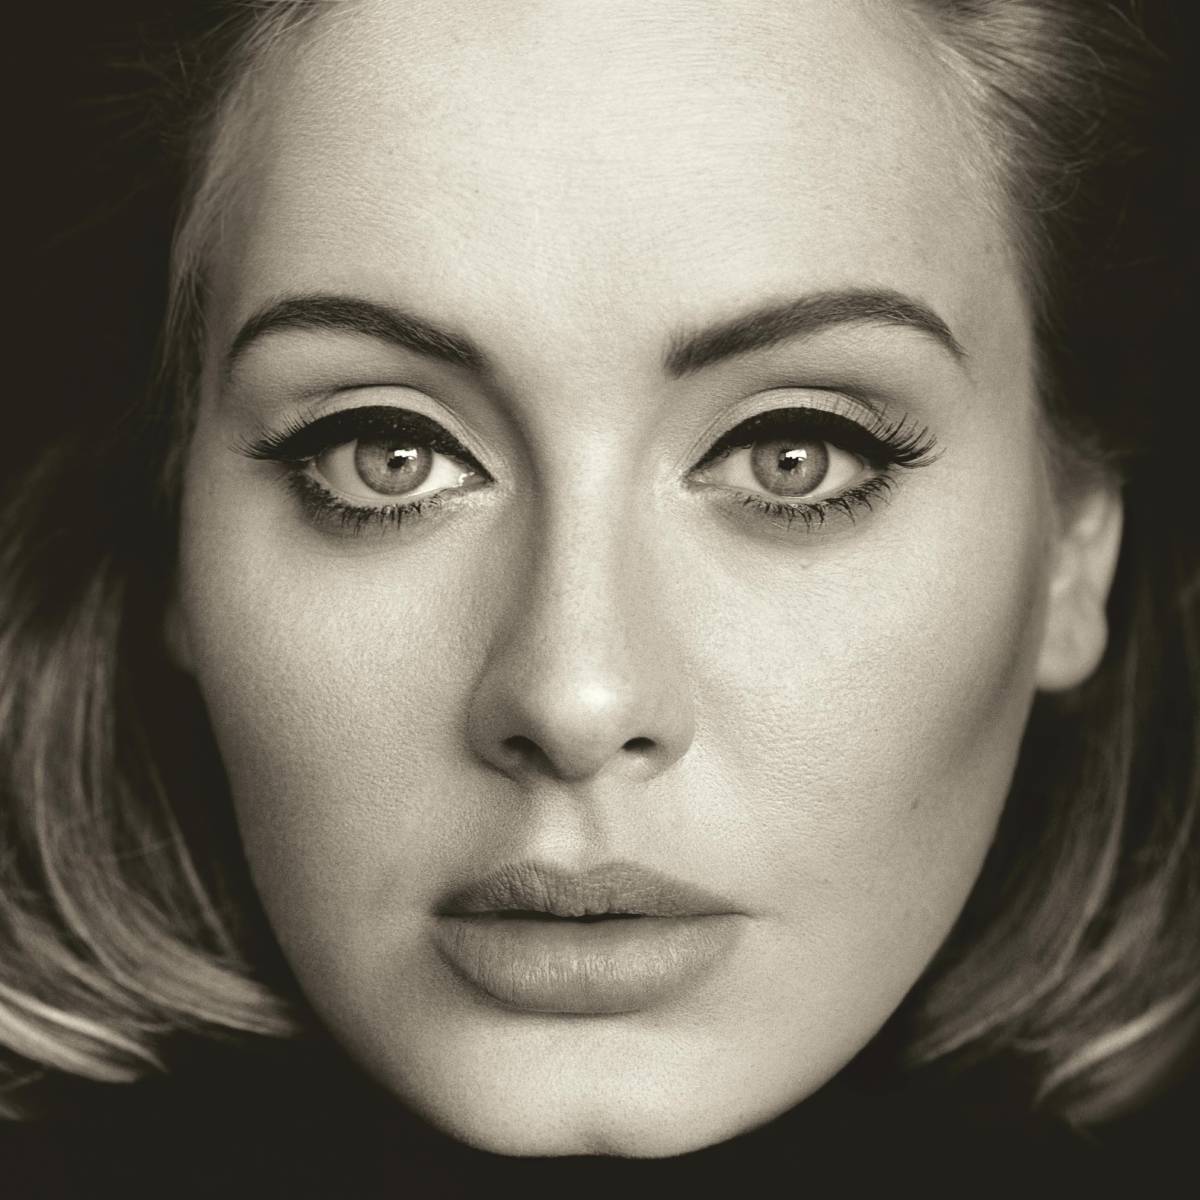 "25" (portada del tercer álbum de estudio de Adele)